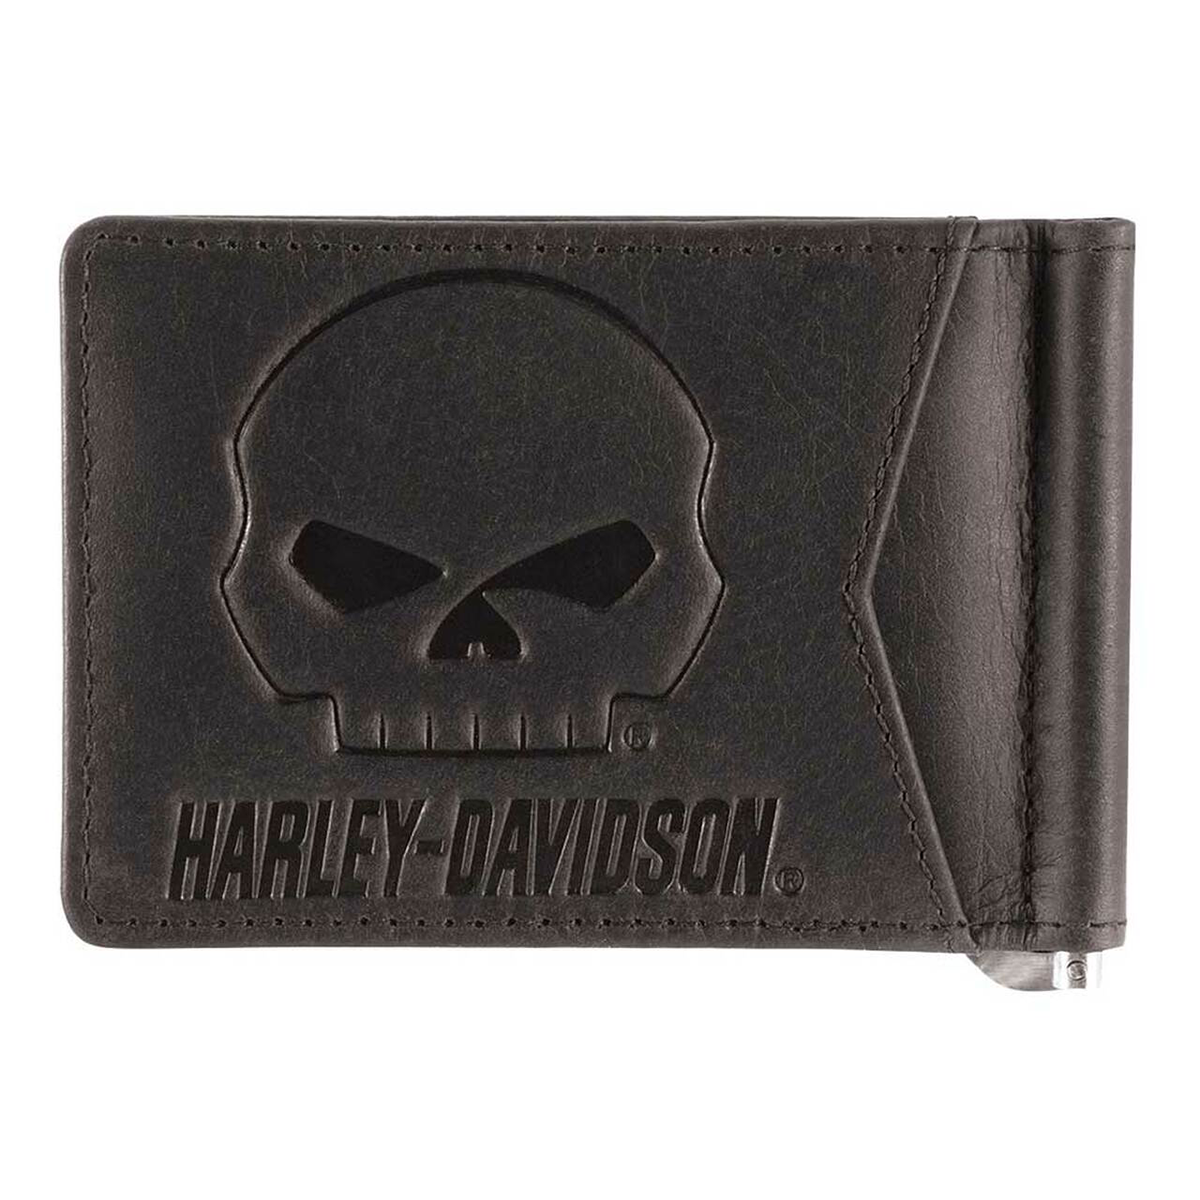 Harley-Davidson Outsider Money Clip Wallet